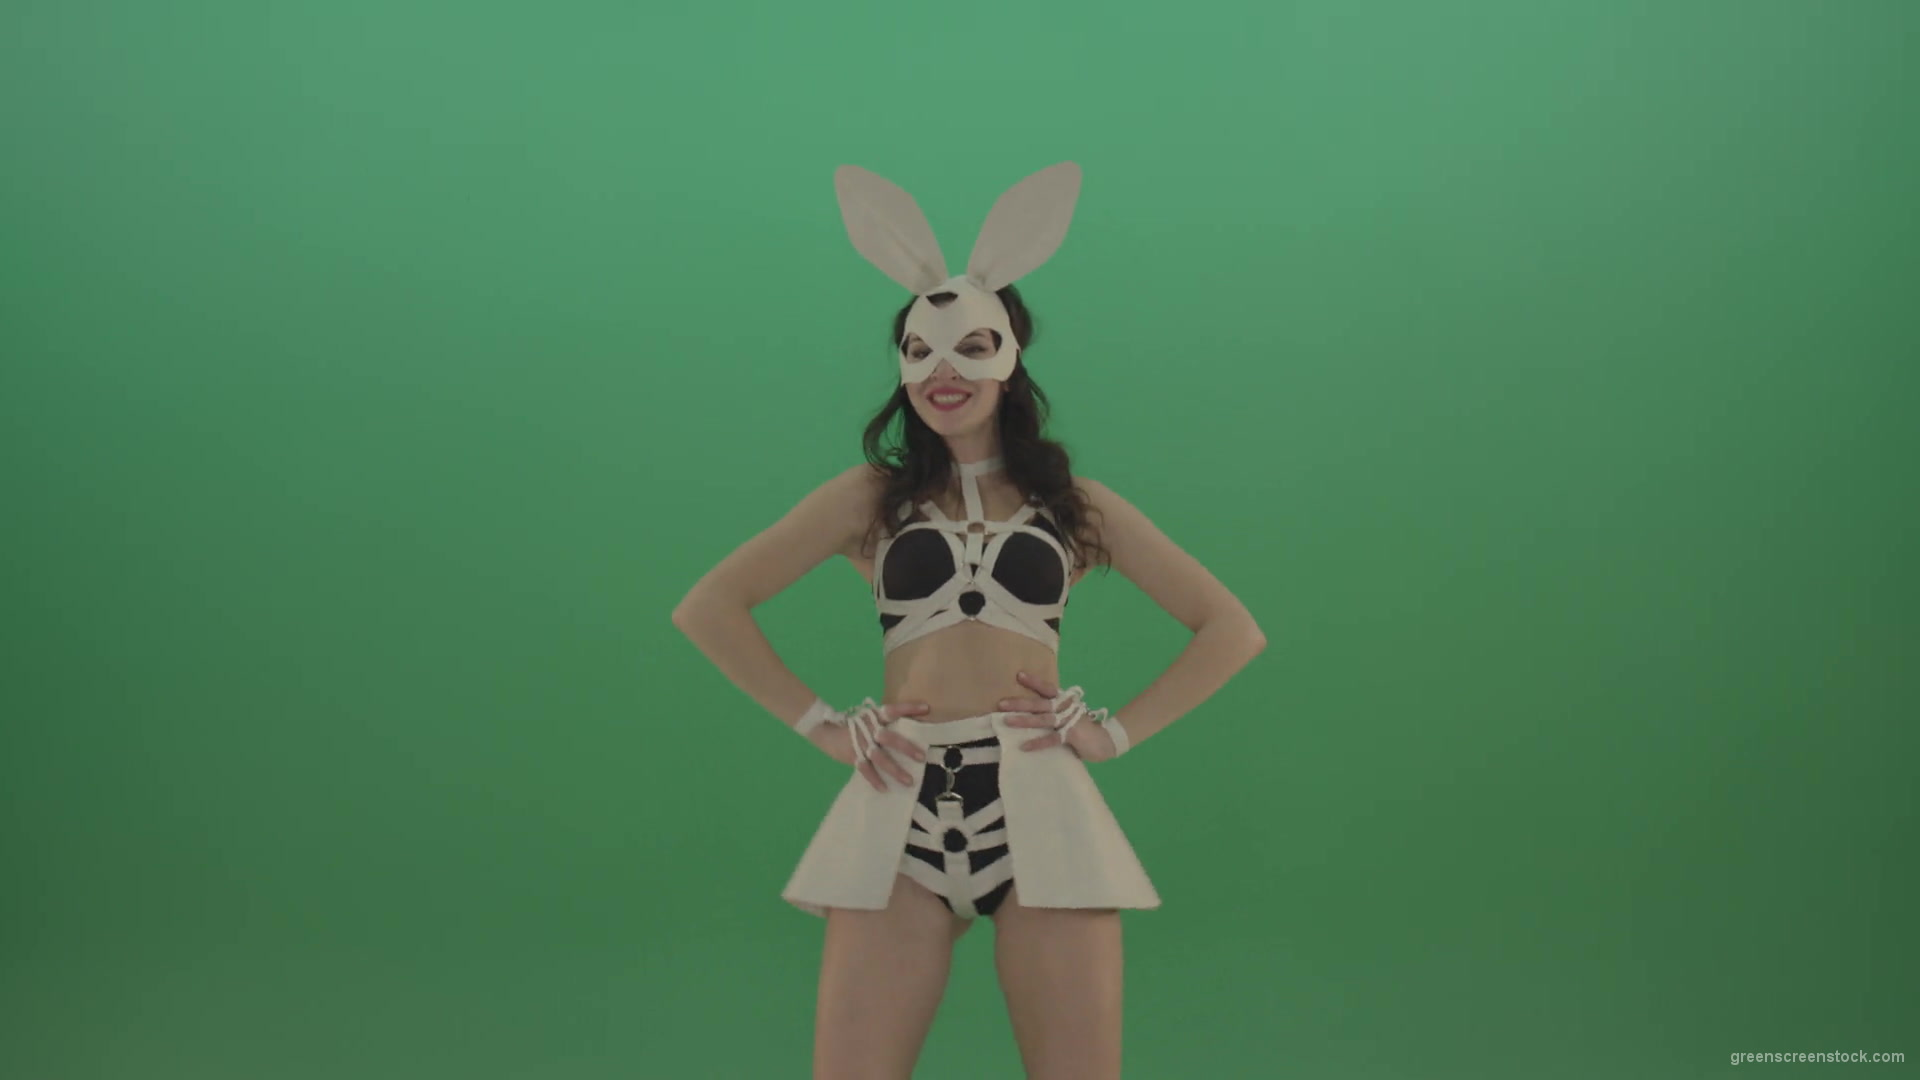 White-Rabbit-Girl-sexy-posing-dancing-in-bunny-style-over-Green-Screen-1920_009 Green Screen Stock